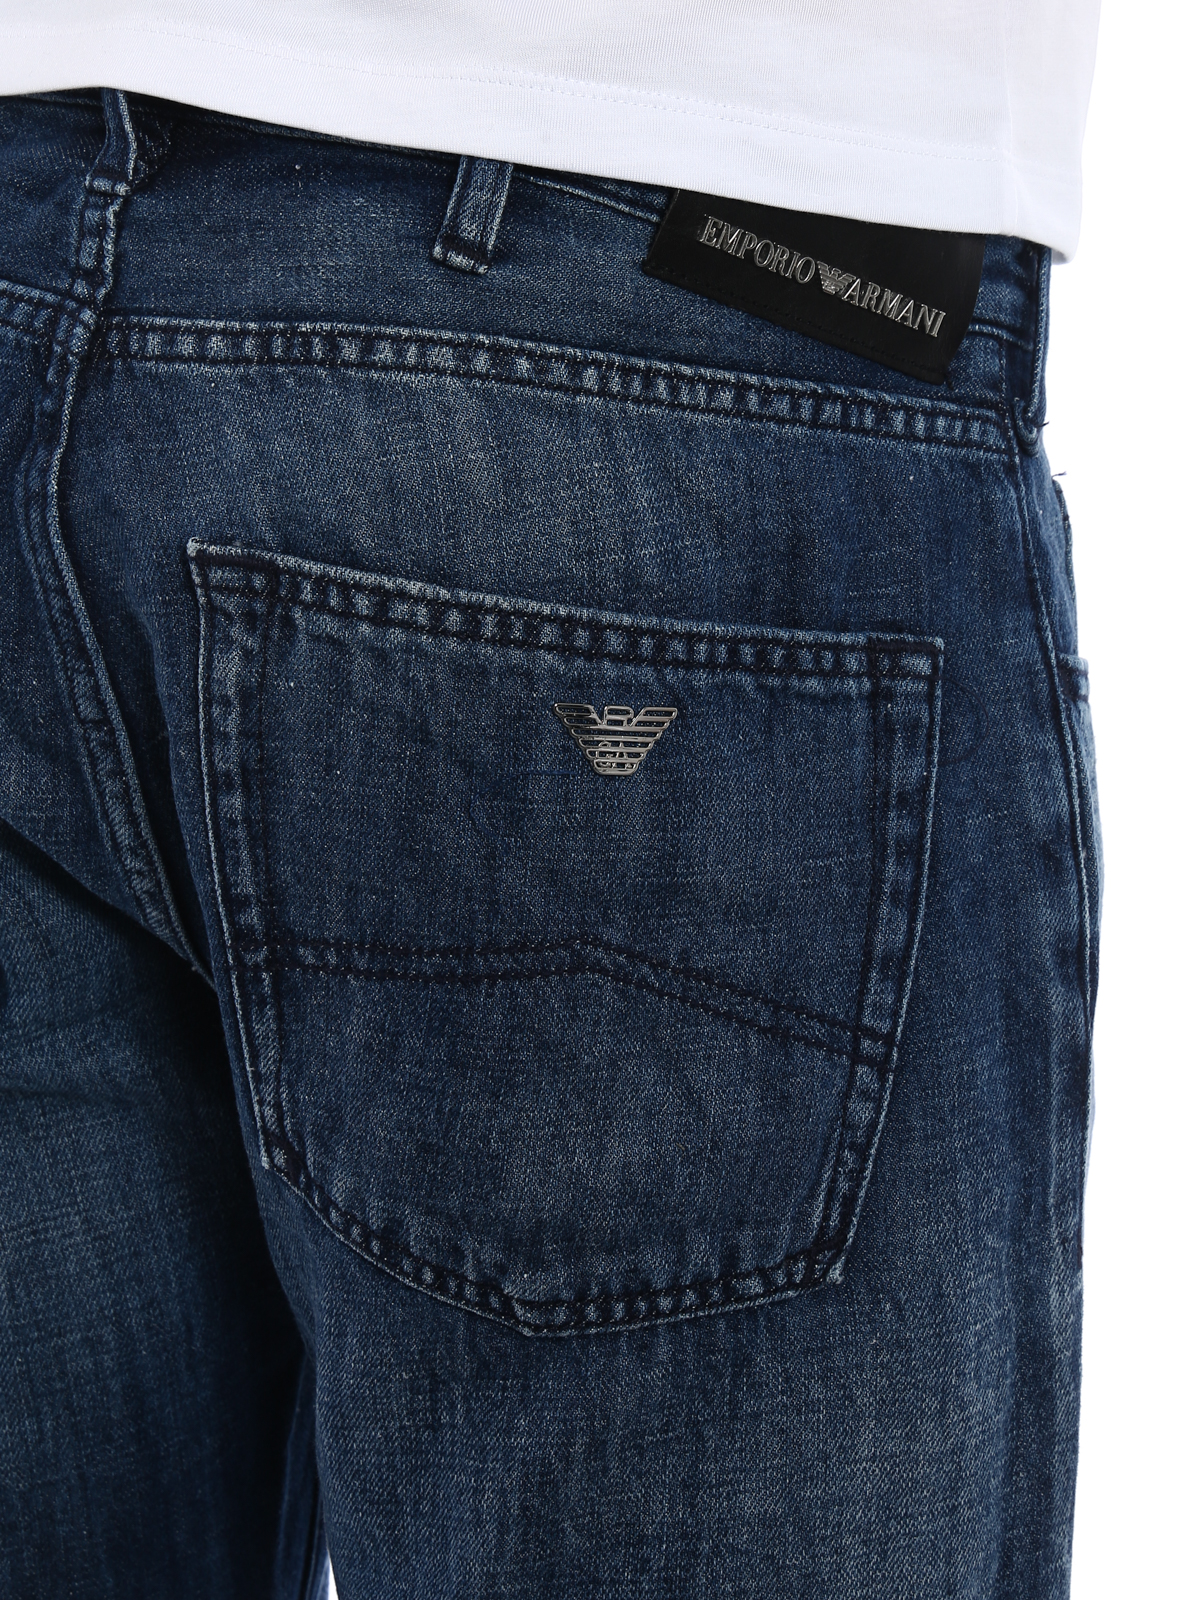 Shop Emporio Armani Dark Wash Cotton And Linen Jeans